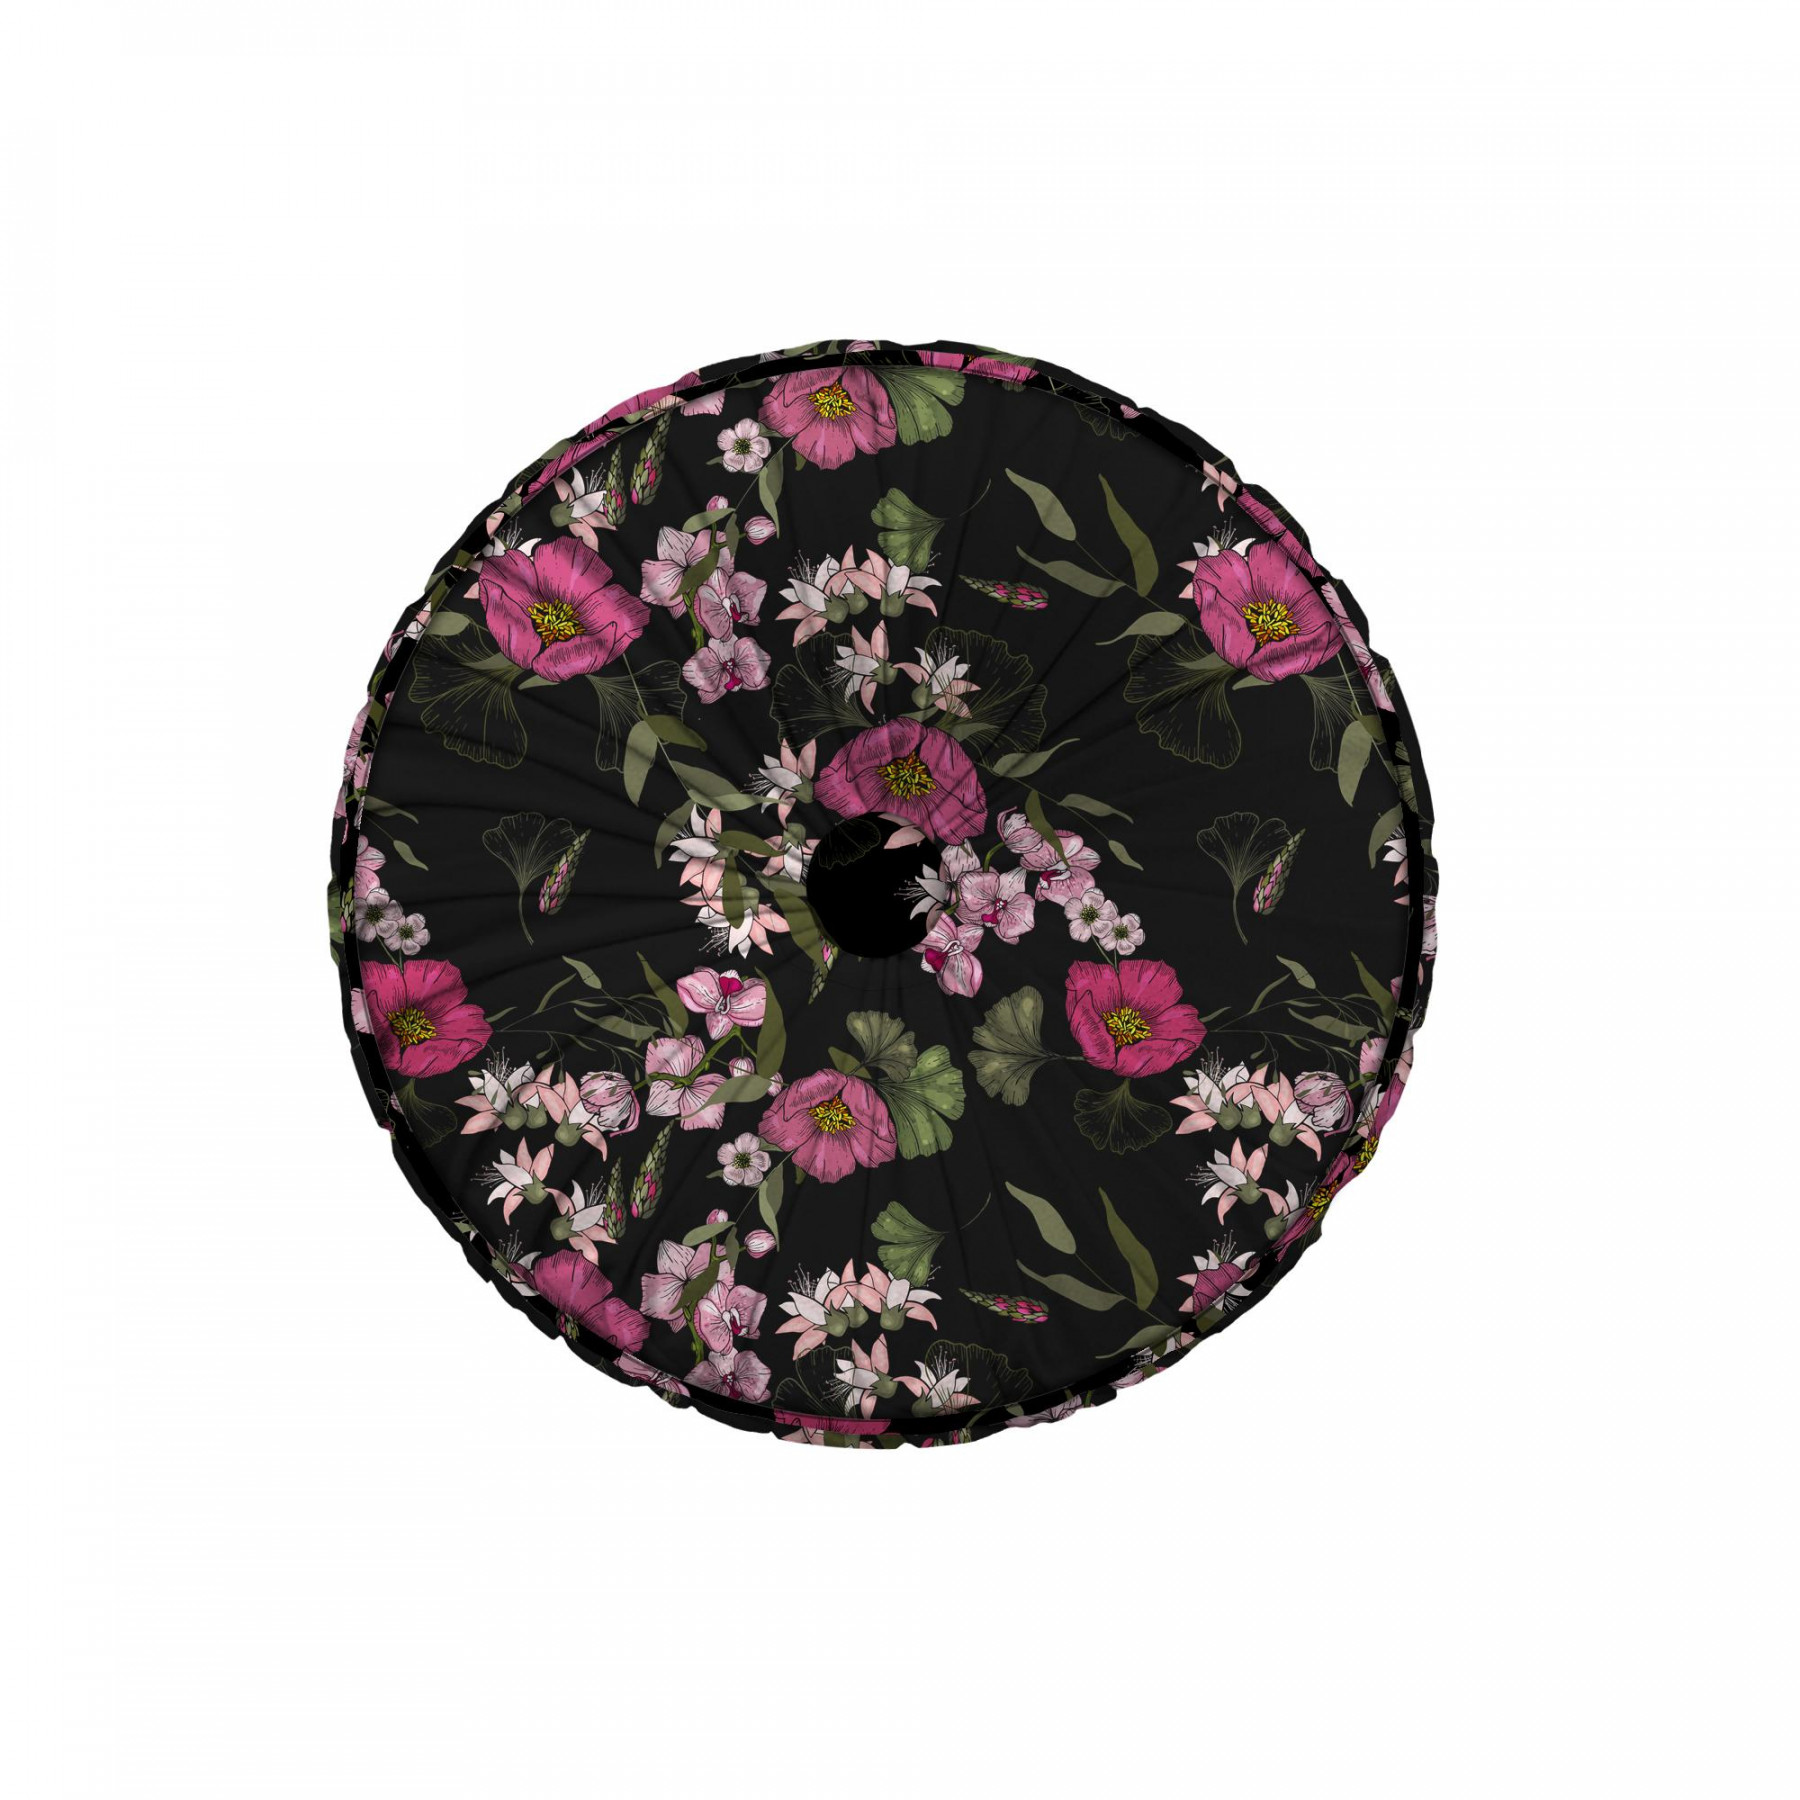 DECORATIVE CUSHION - PINK FLOWERS PAT. 2 - sewing set